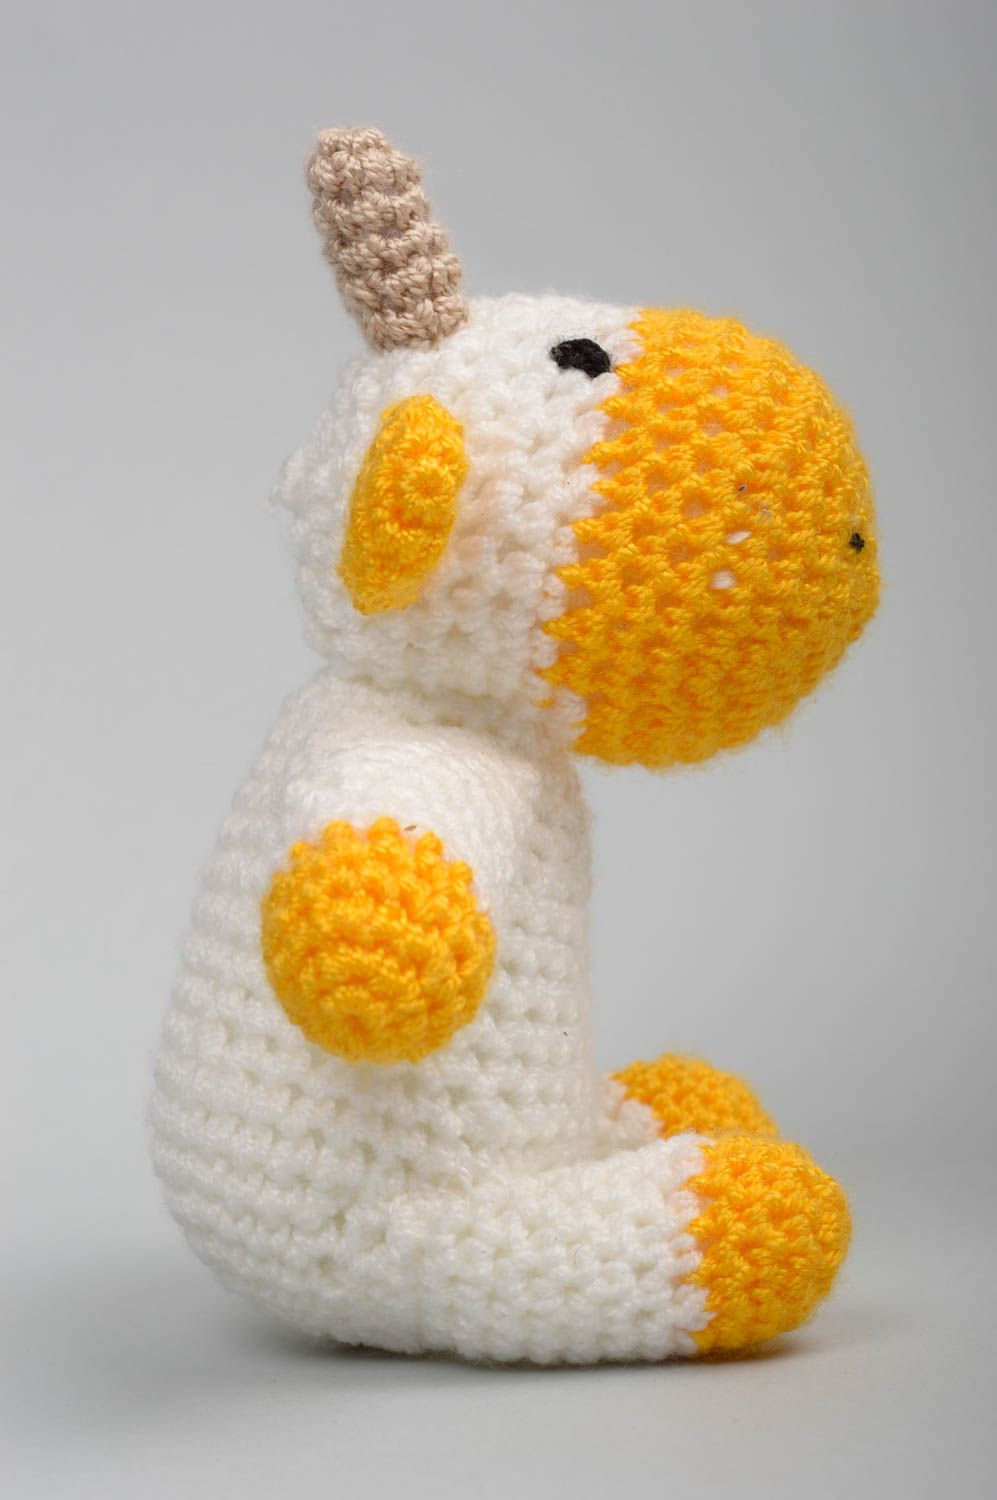 Handmade toy soft toy crochet stuffed animals animal figurine home decor photo 2